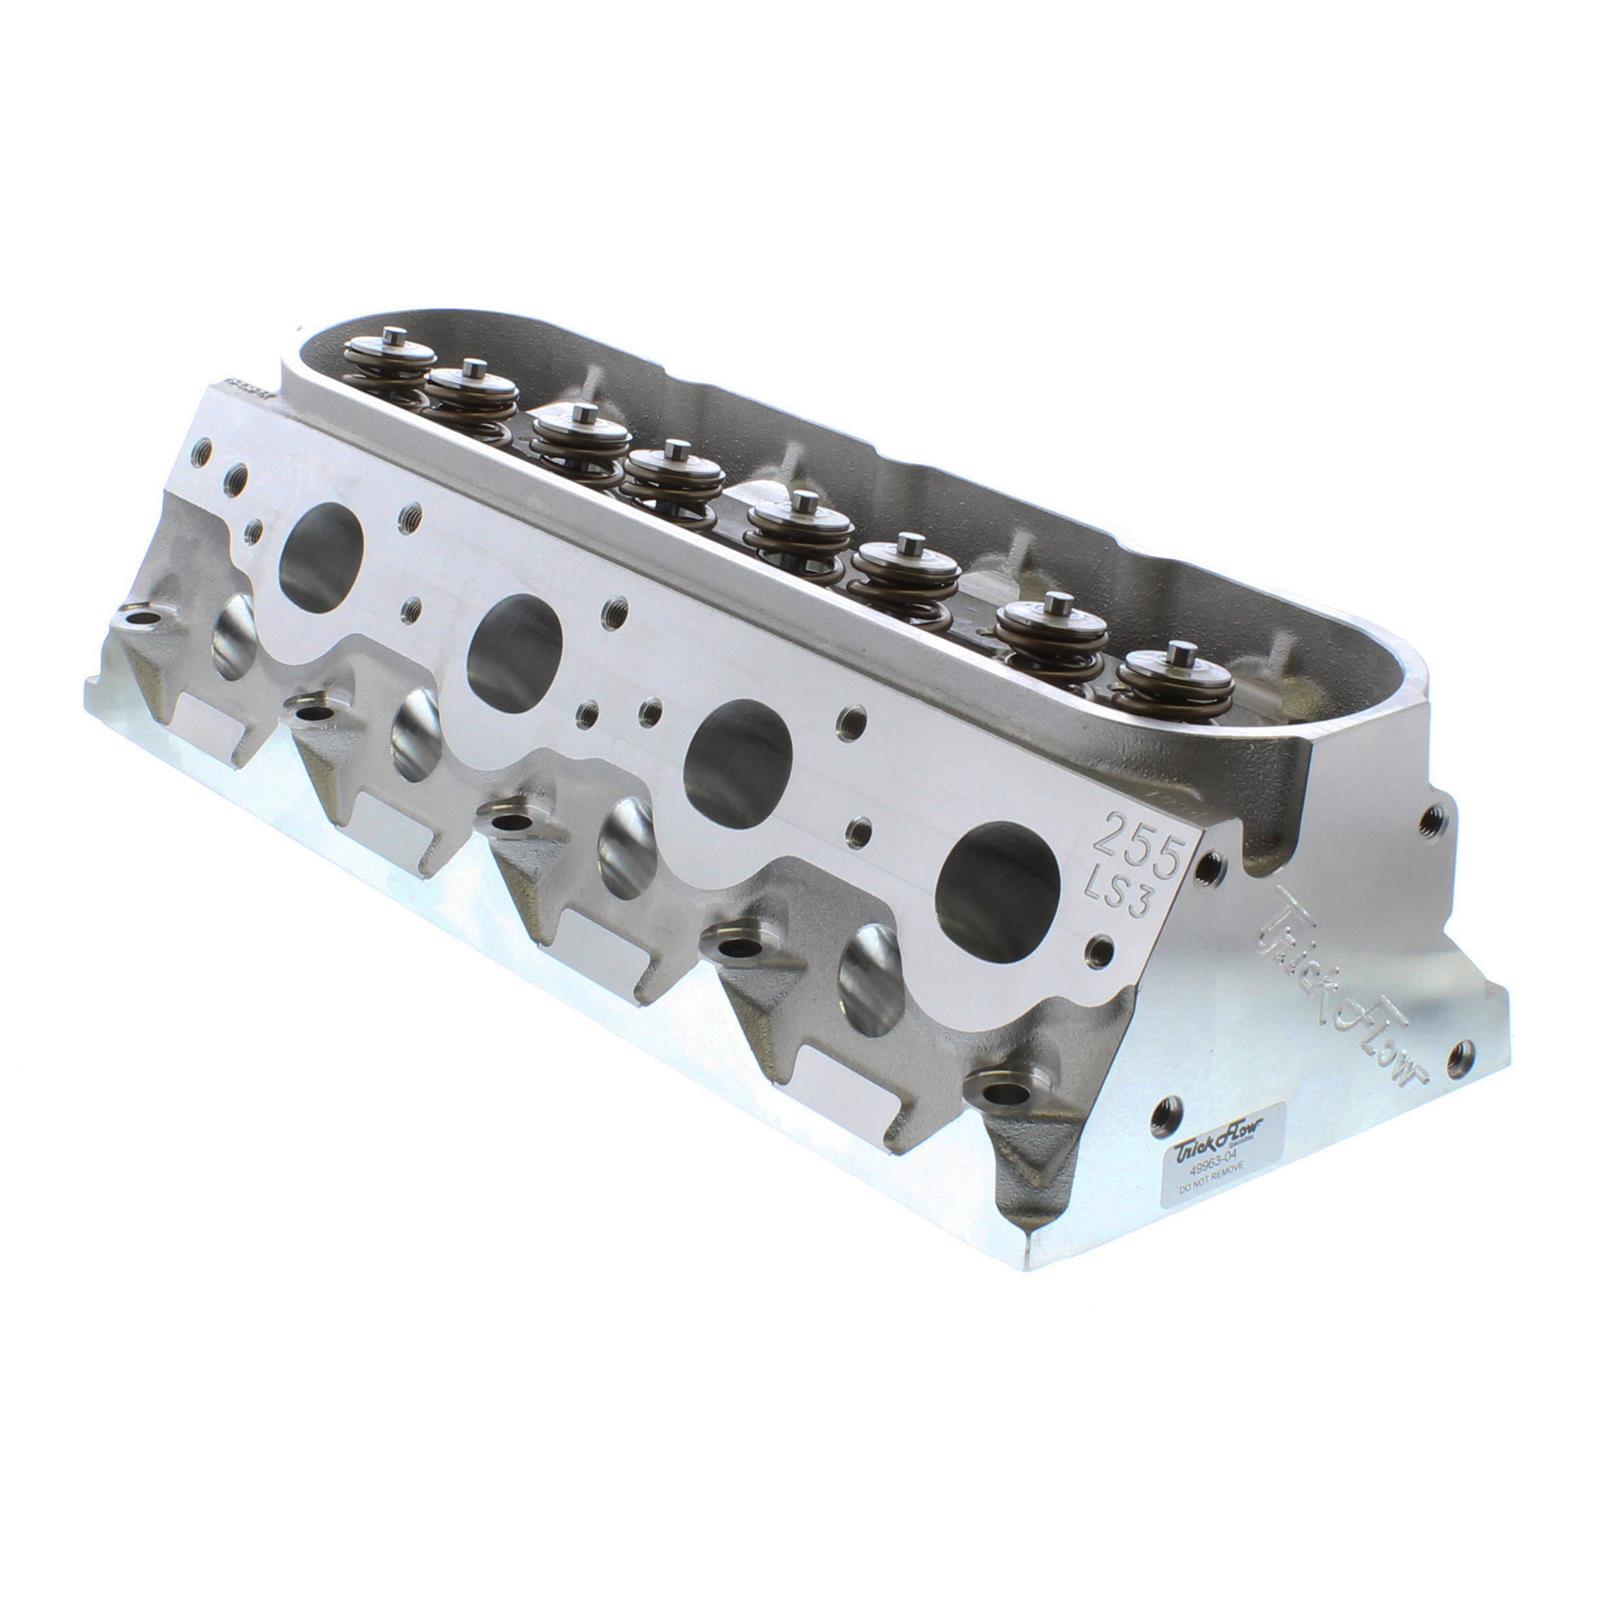 LSX model engine with TrickFlow carburetor resin 3D printed 1:32-1:8 scale